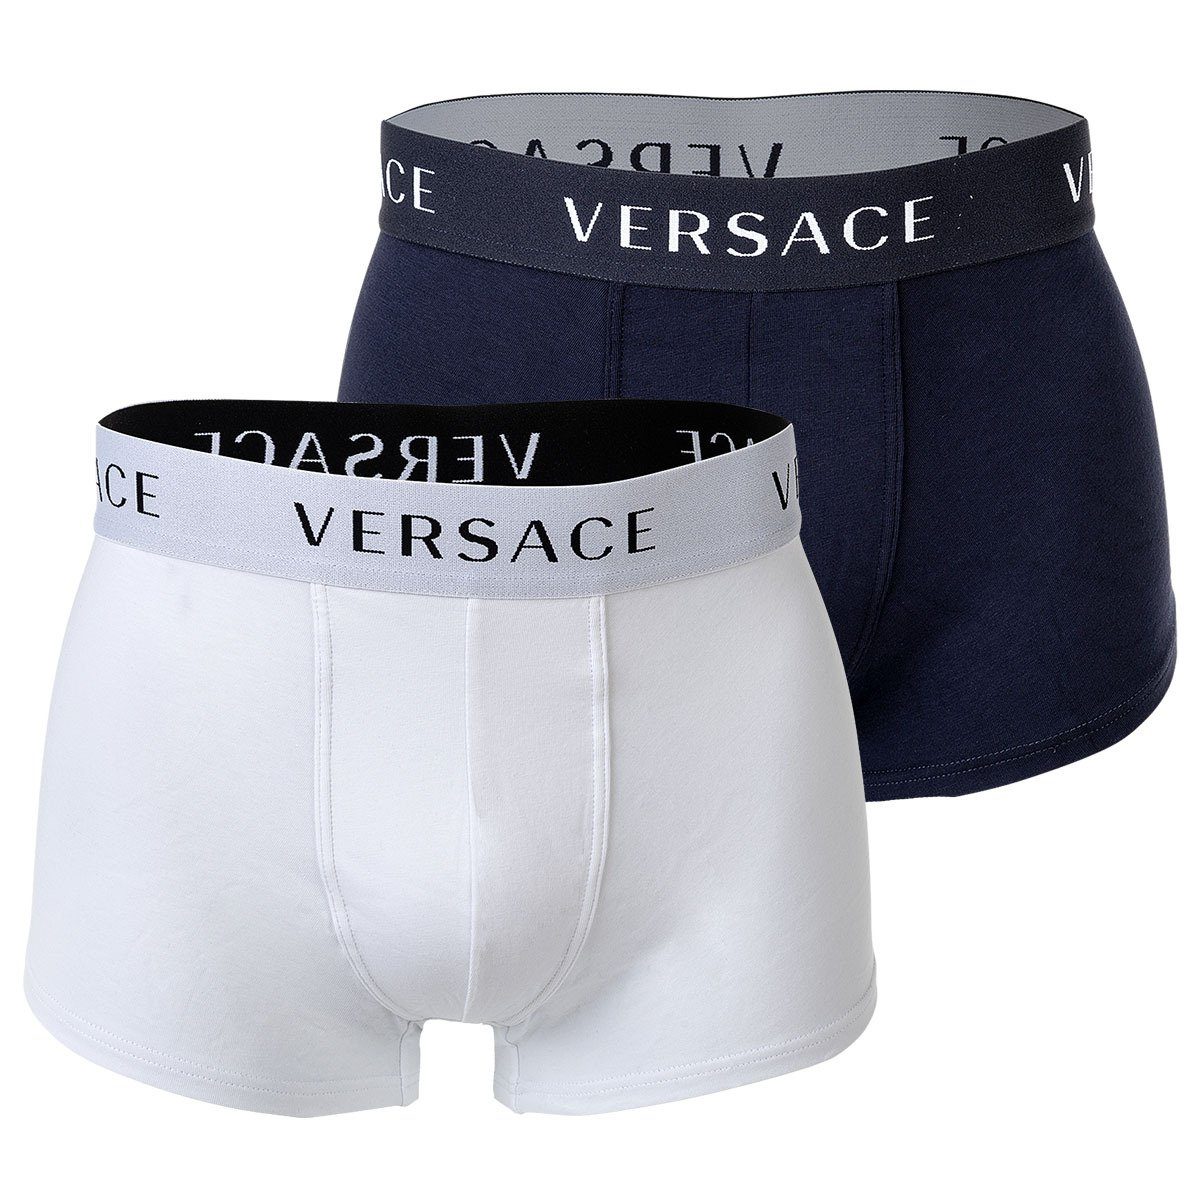 Versace Boxer Herren Boxer Shorts, 2er Pack - Trunk Weiß/Blau